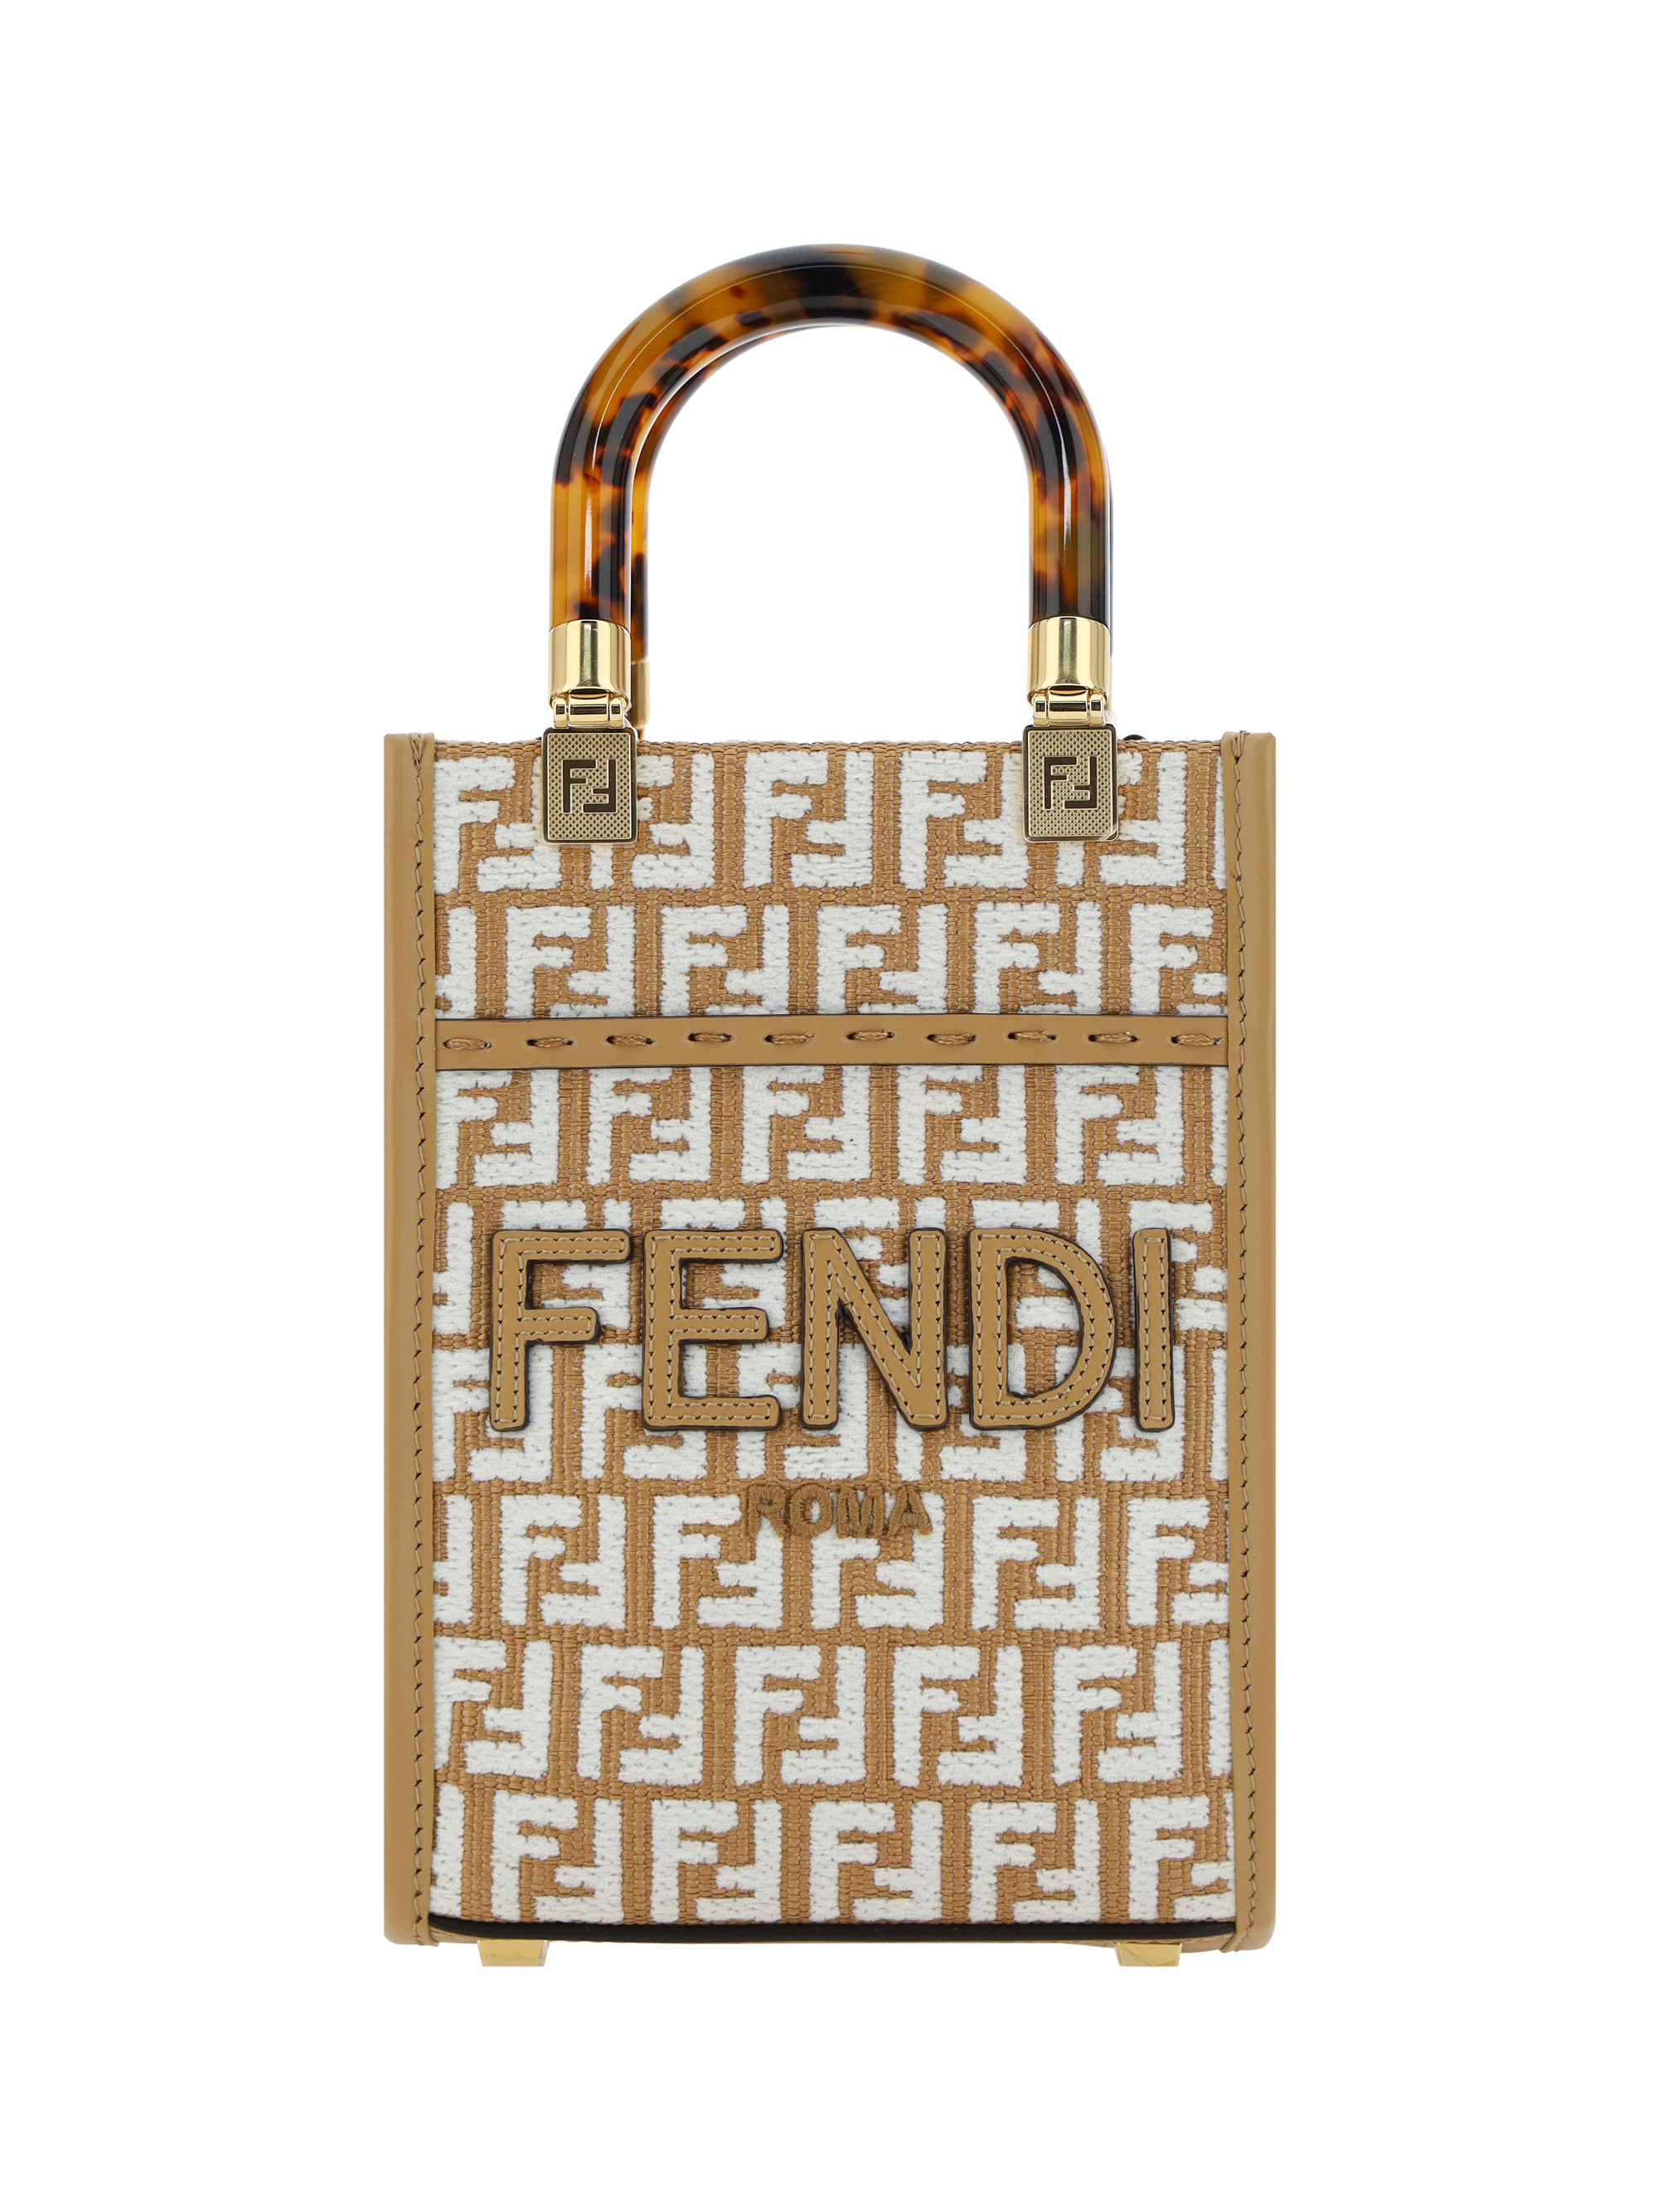 Fendi Handbags On Sale Up To 90% Off Retail